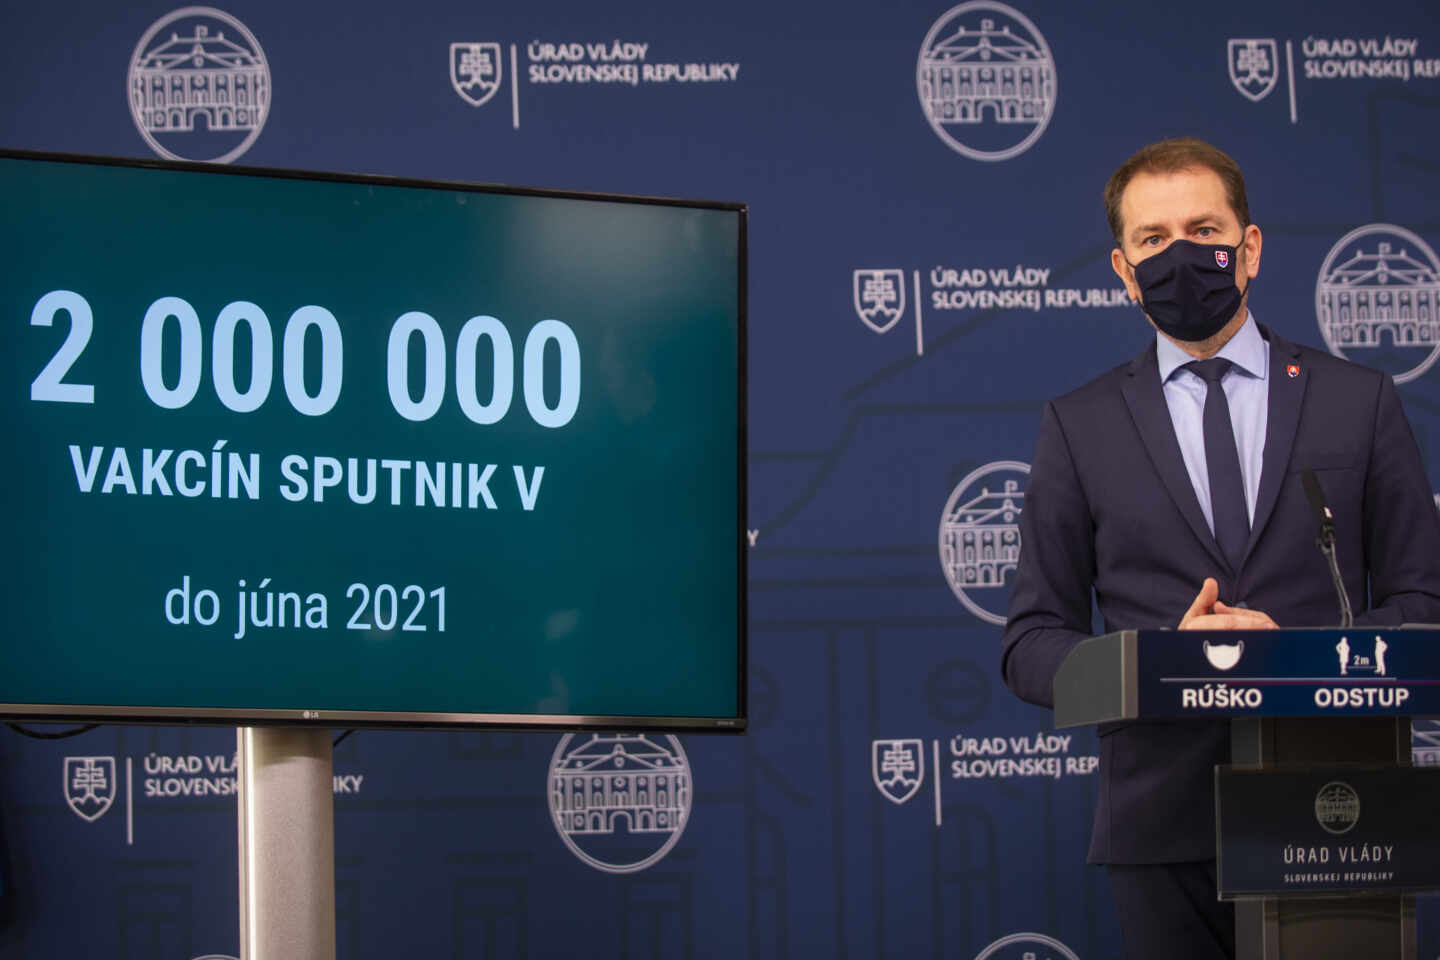 El primer ministro de Eslovaquia da una rueda de prensa sobre las vacunas rusas Sputnik V.